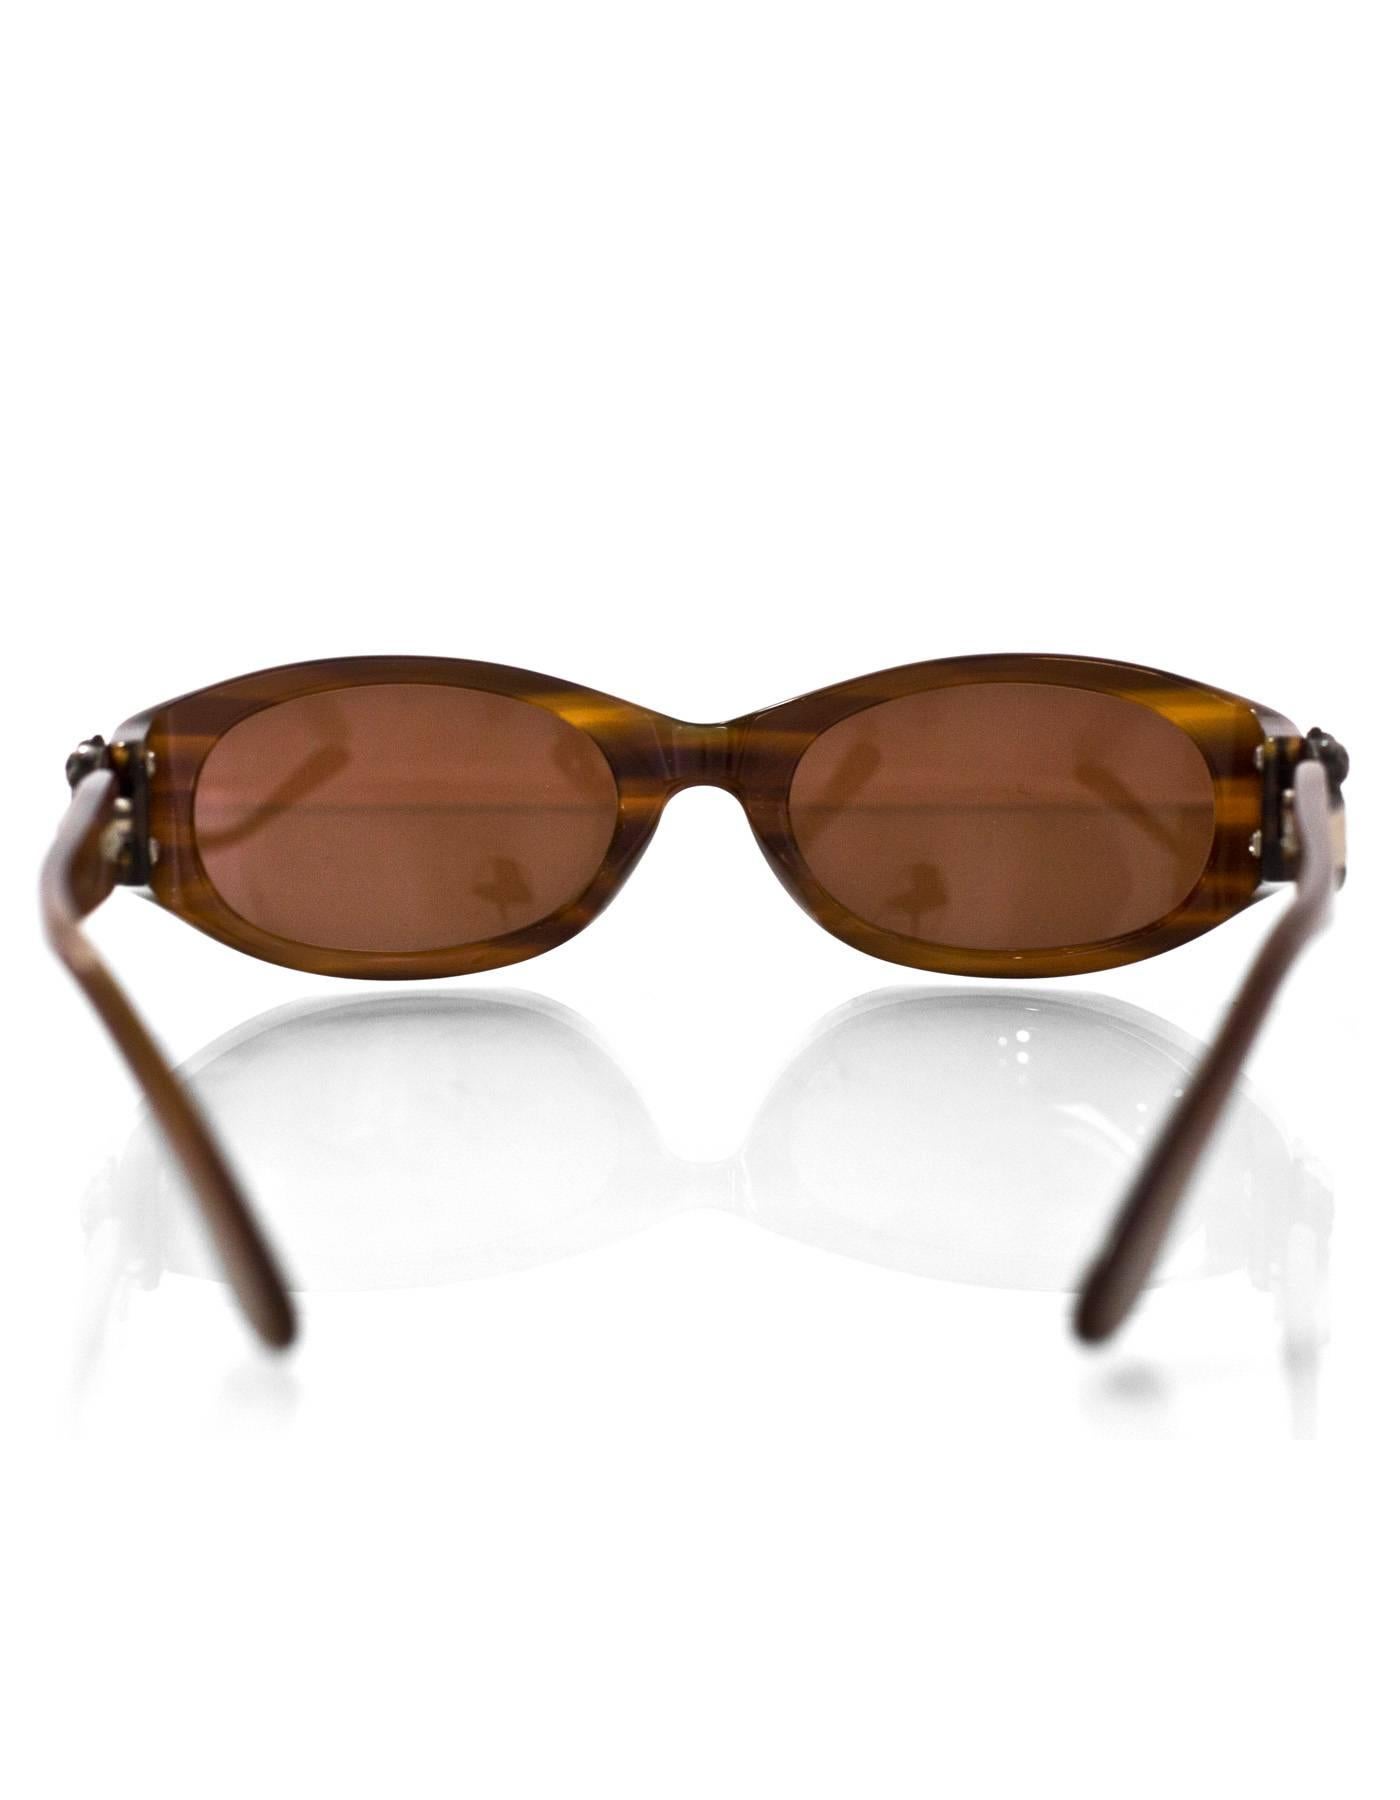 Women's Kieselstein-Cord Brown Surrender Sunglasses with Case